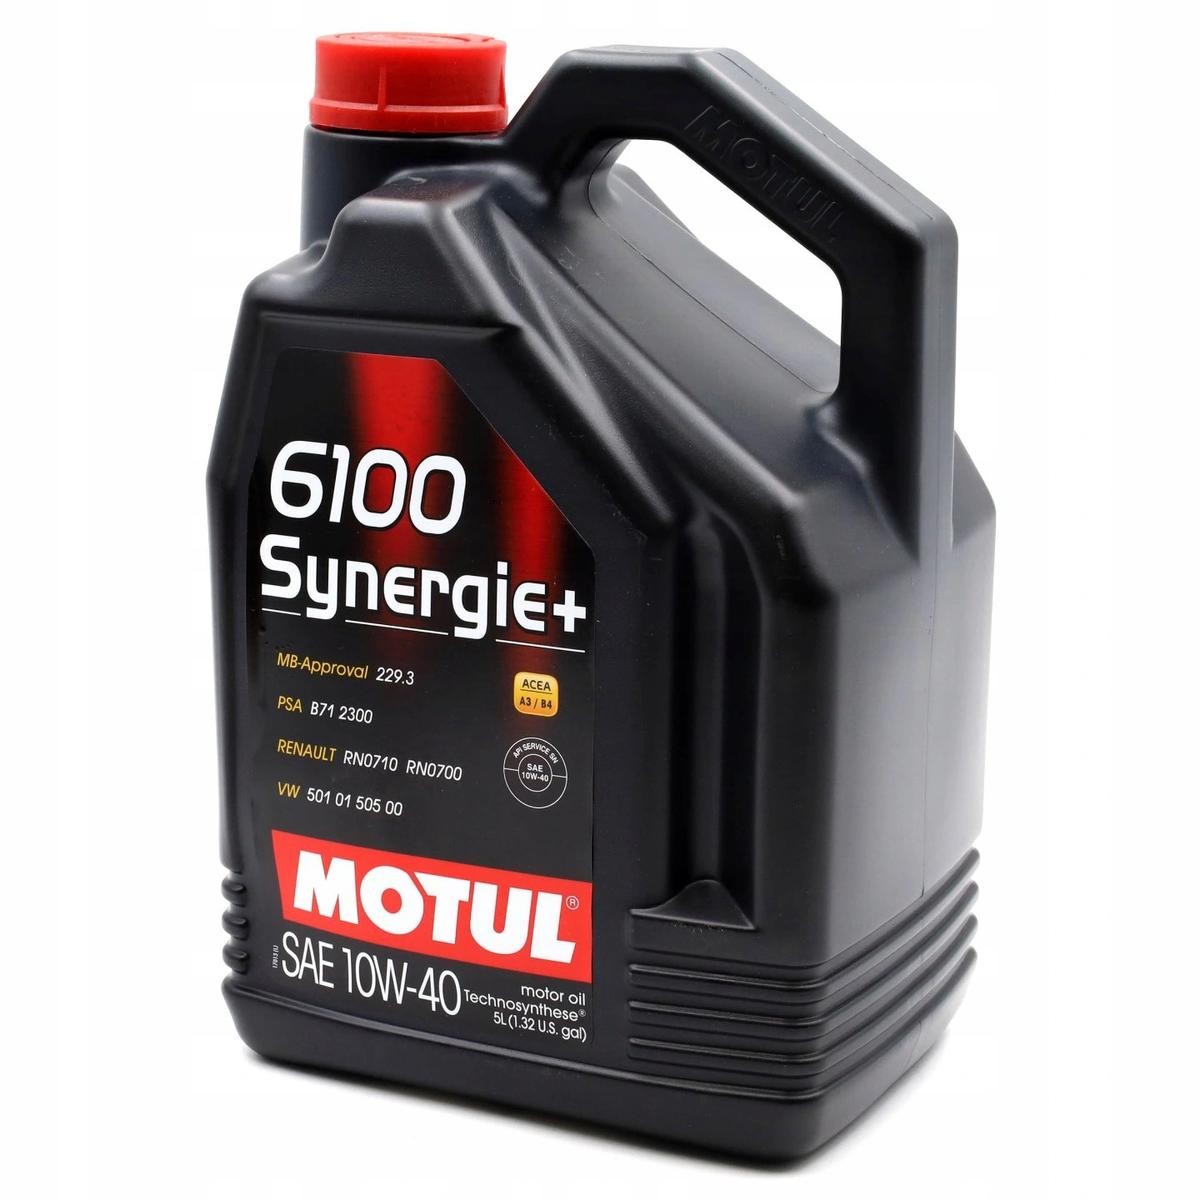 Hyundai Motoröl MOTUL 16100 zum günstigen Preis